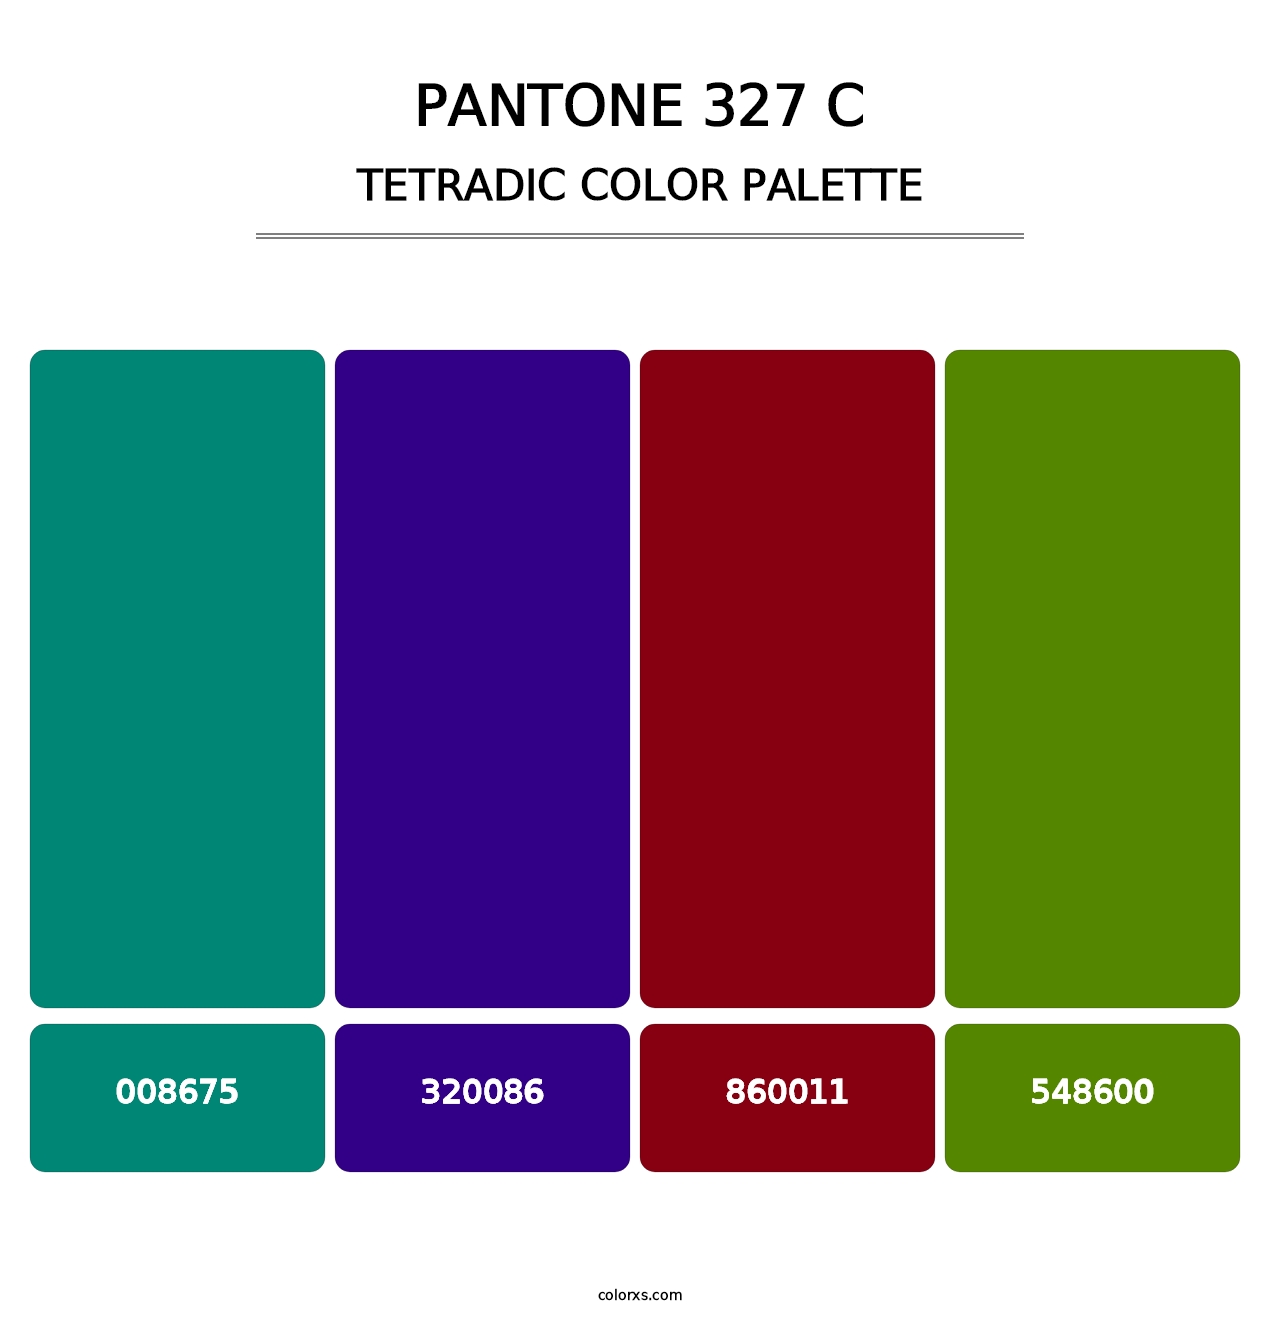 PANTONE 327 C - Tetradic Color Palette